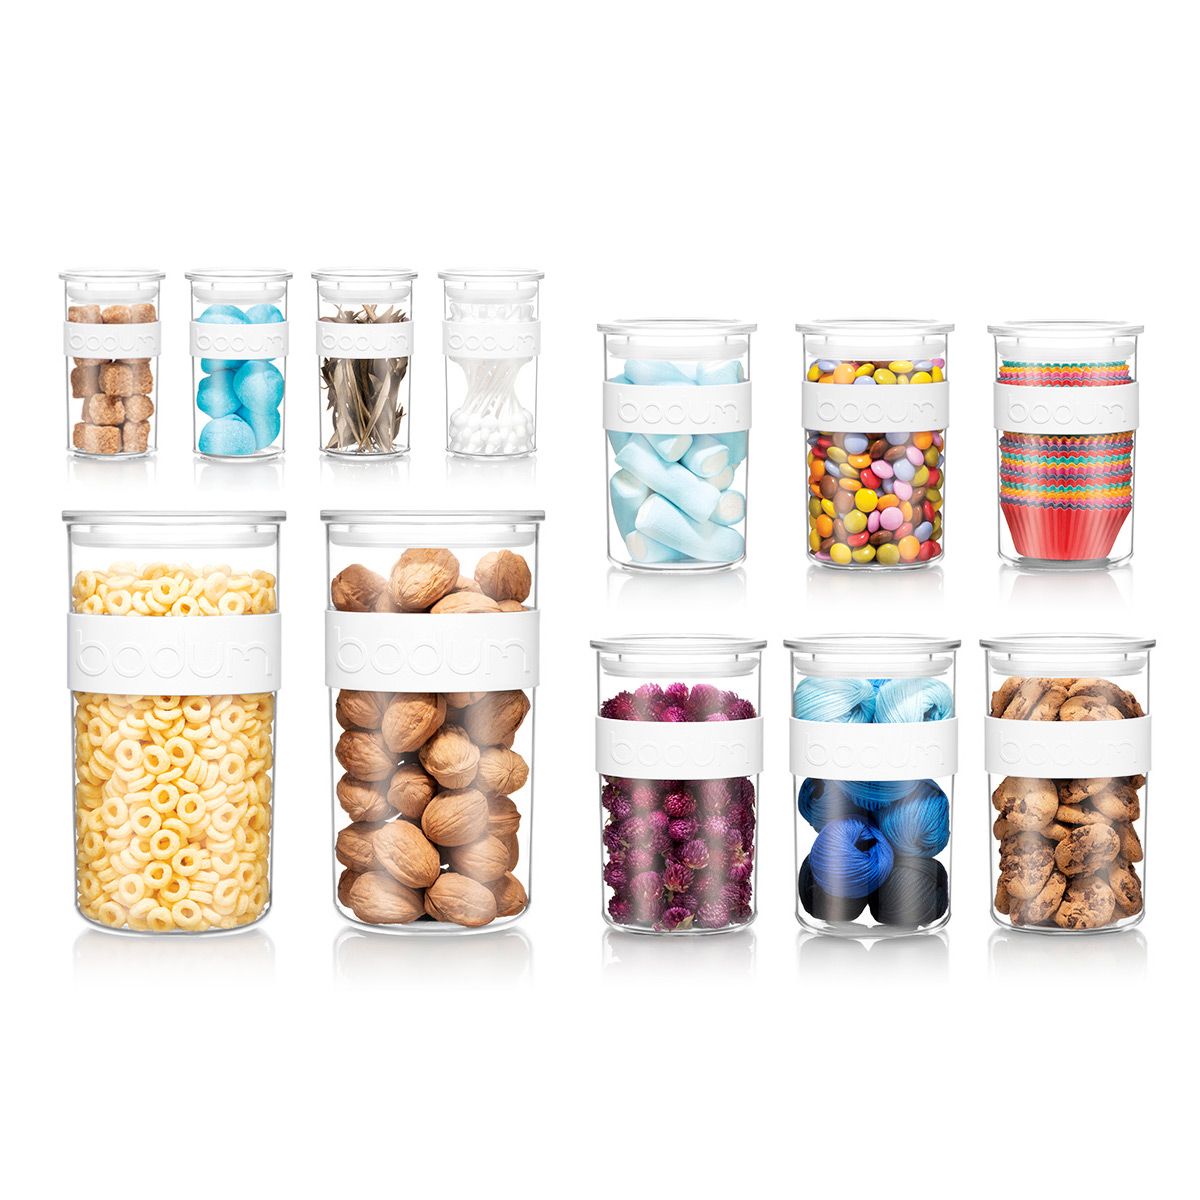 Bodum - Presso 12 pce. Food Storage Jar Sets - White $38.69 / Black $40.49 + Free Shipping